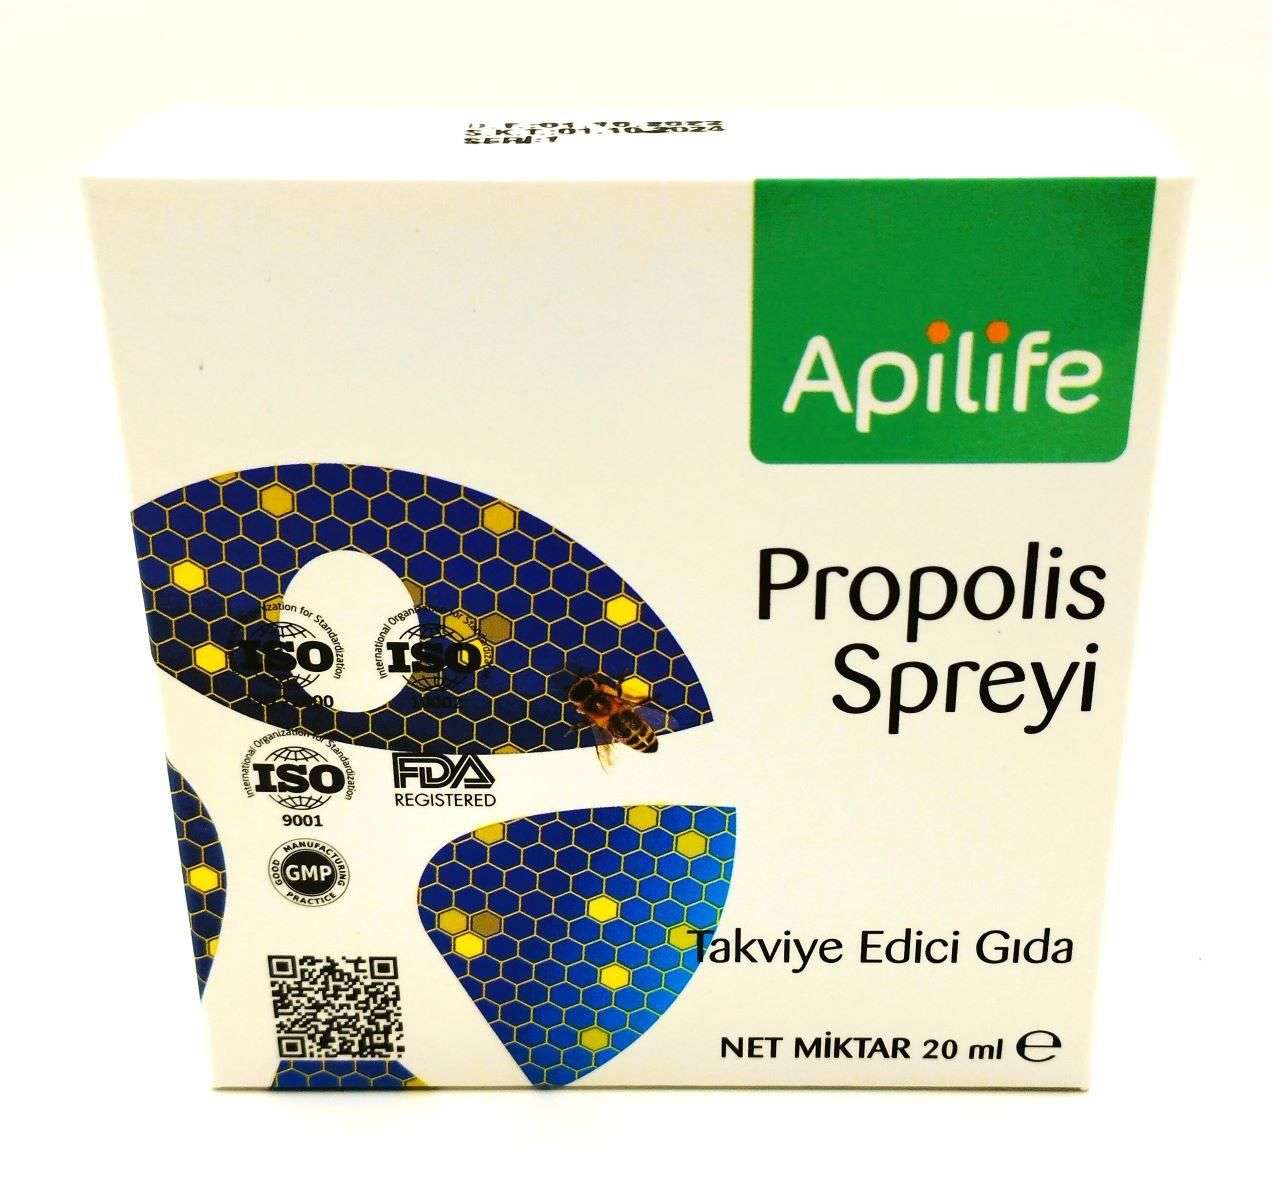 Apilife Propolis Spreyi 20 ml